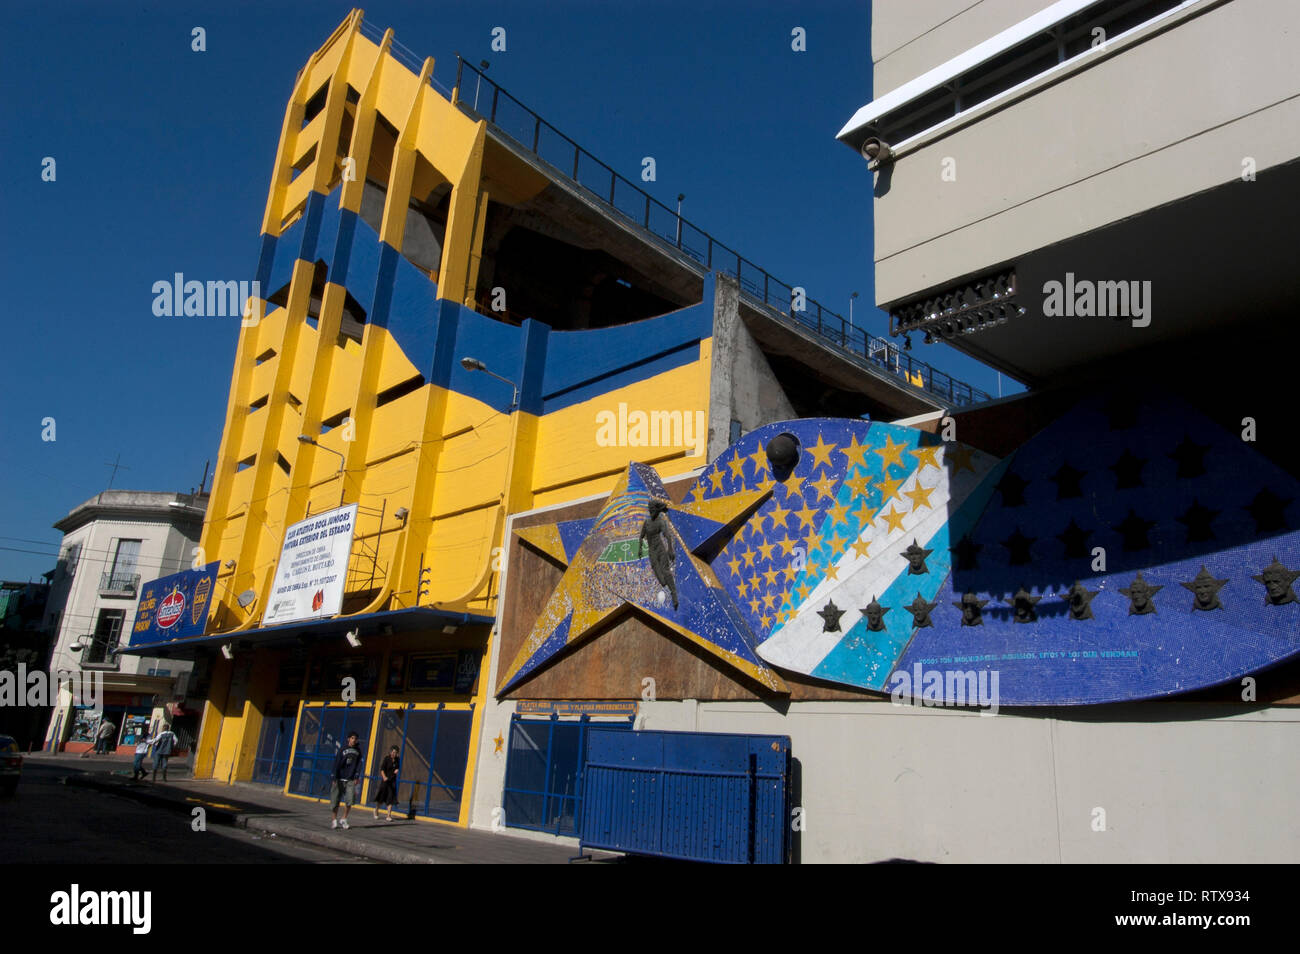 Alberto J. Armando or La Bombonera stadium, home of the soccer team Boca Juniors, Buenos Aires, Argentina Stock Photo